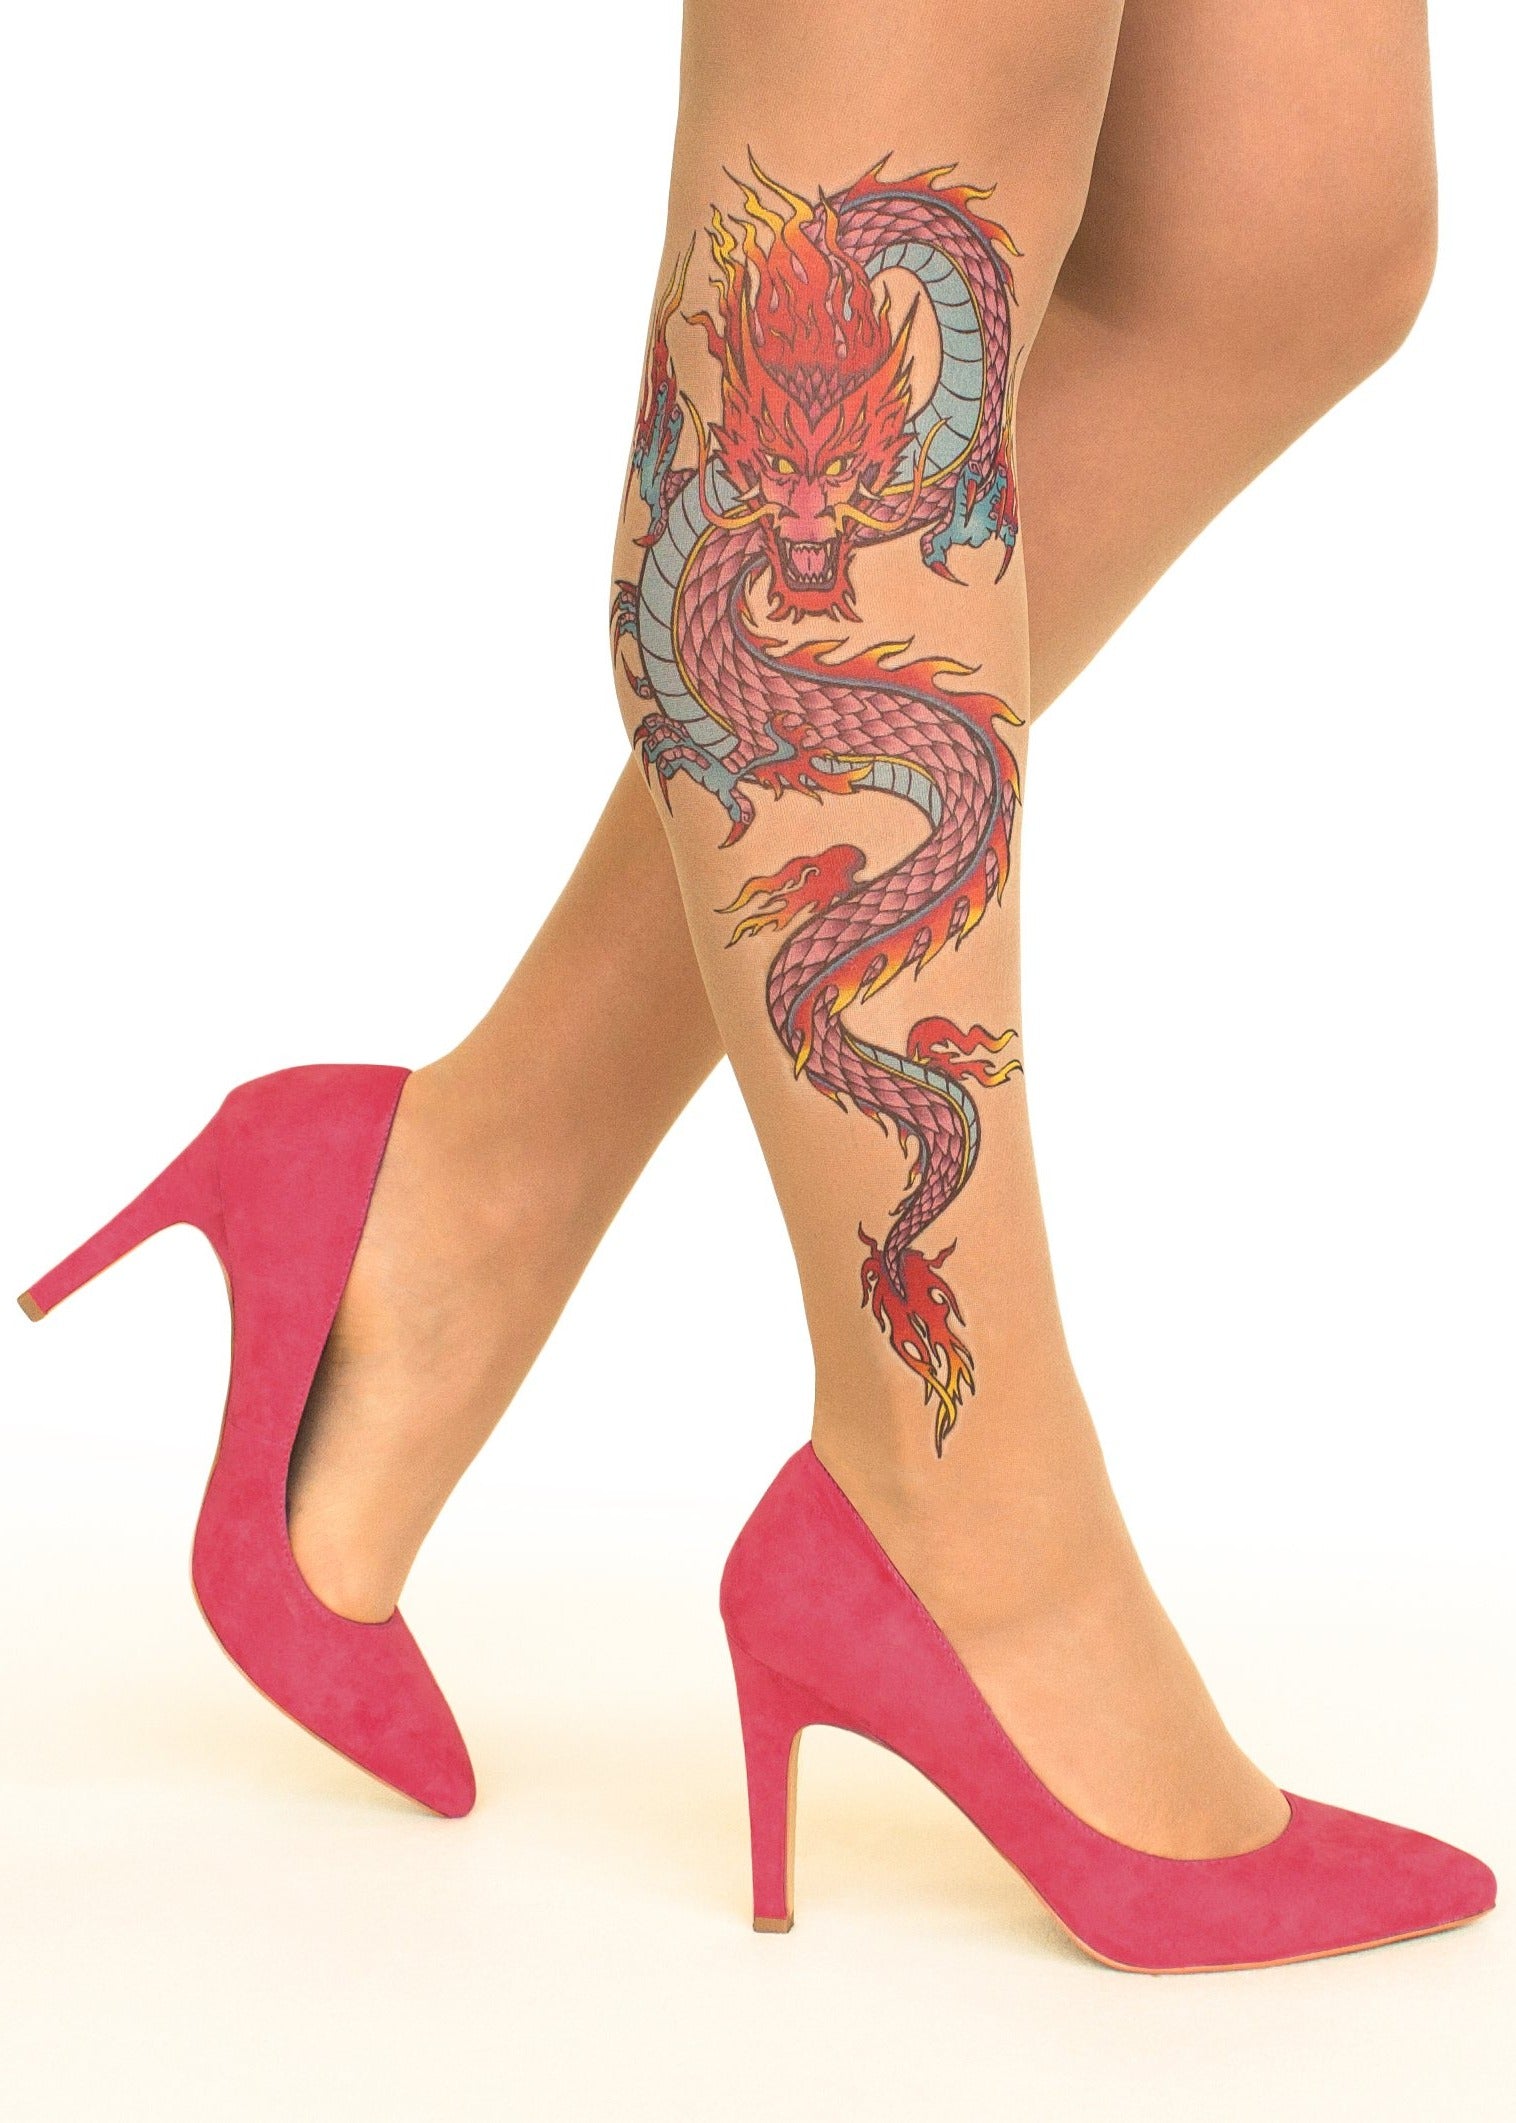 Dragon red tattoo March girl legging hollow tank combo